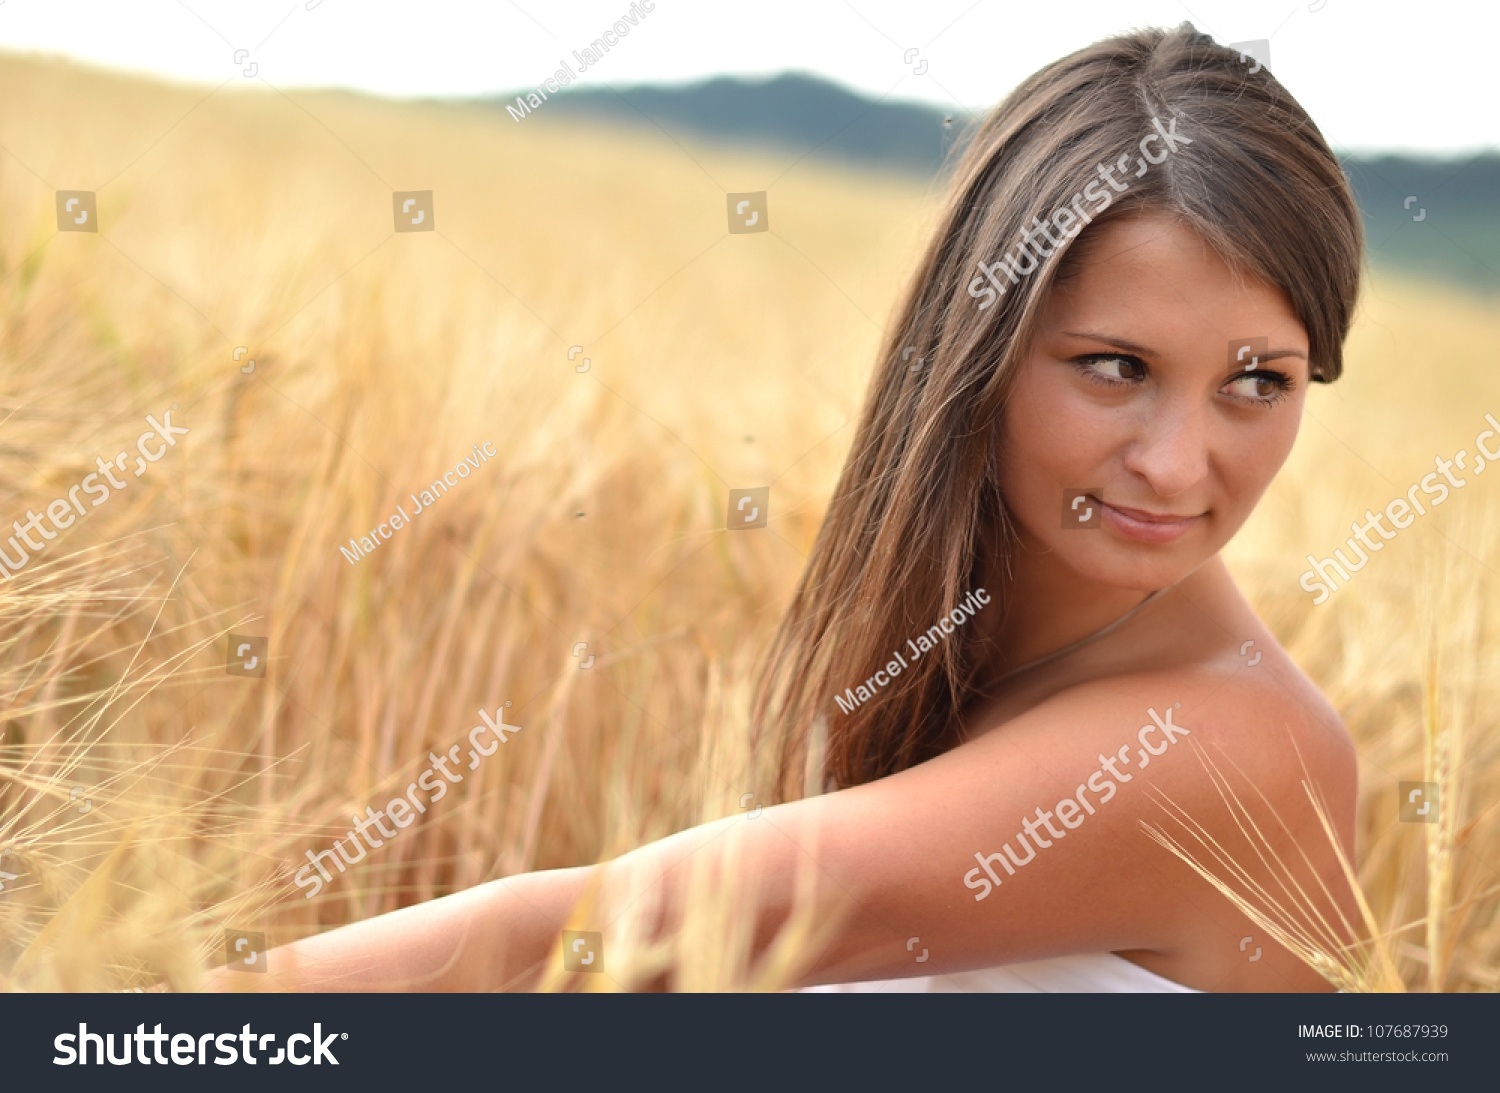 woman in golden wheat #107687939